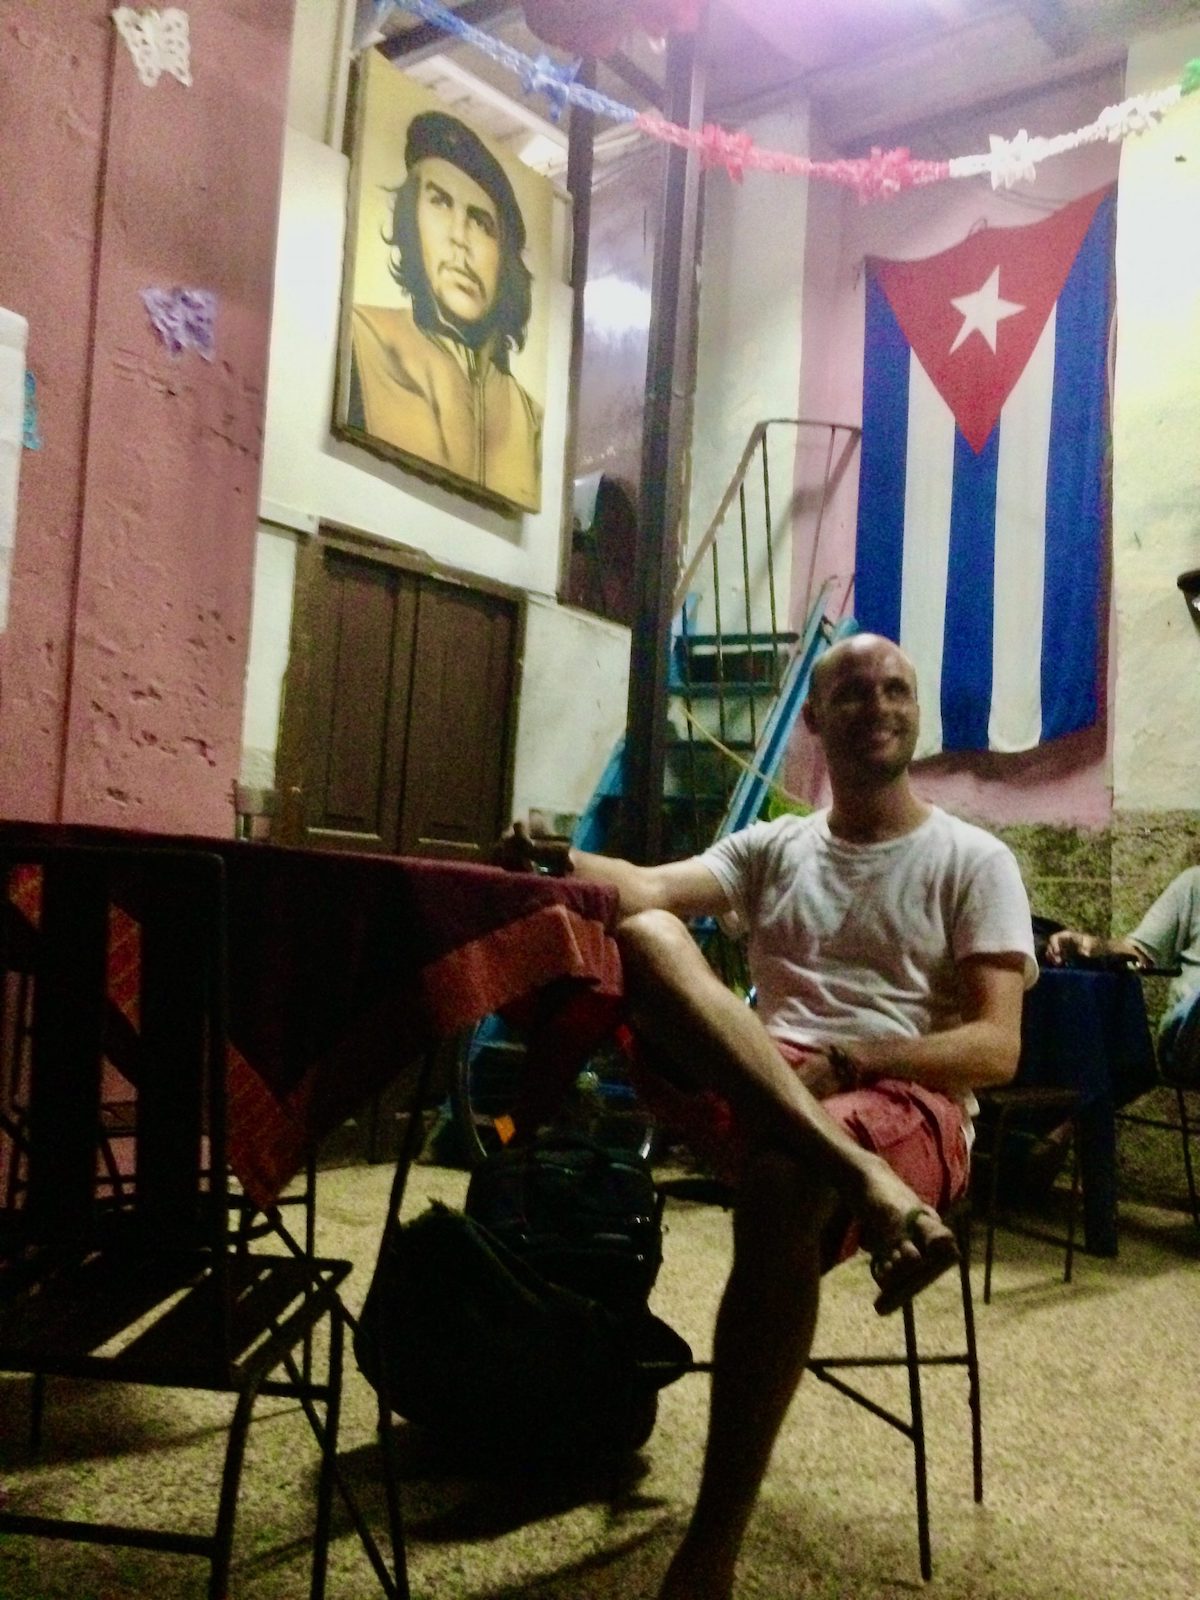 A man crosses his leg and smiles with a large Che Guevara portrait alongside the Cuba flag in Oldtown Havana, Cuba.